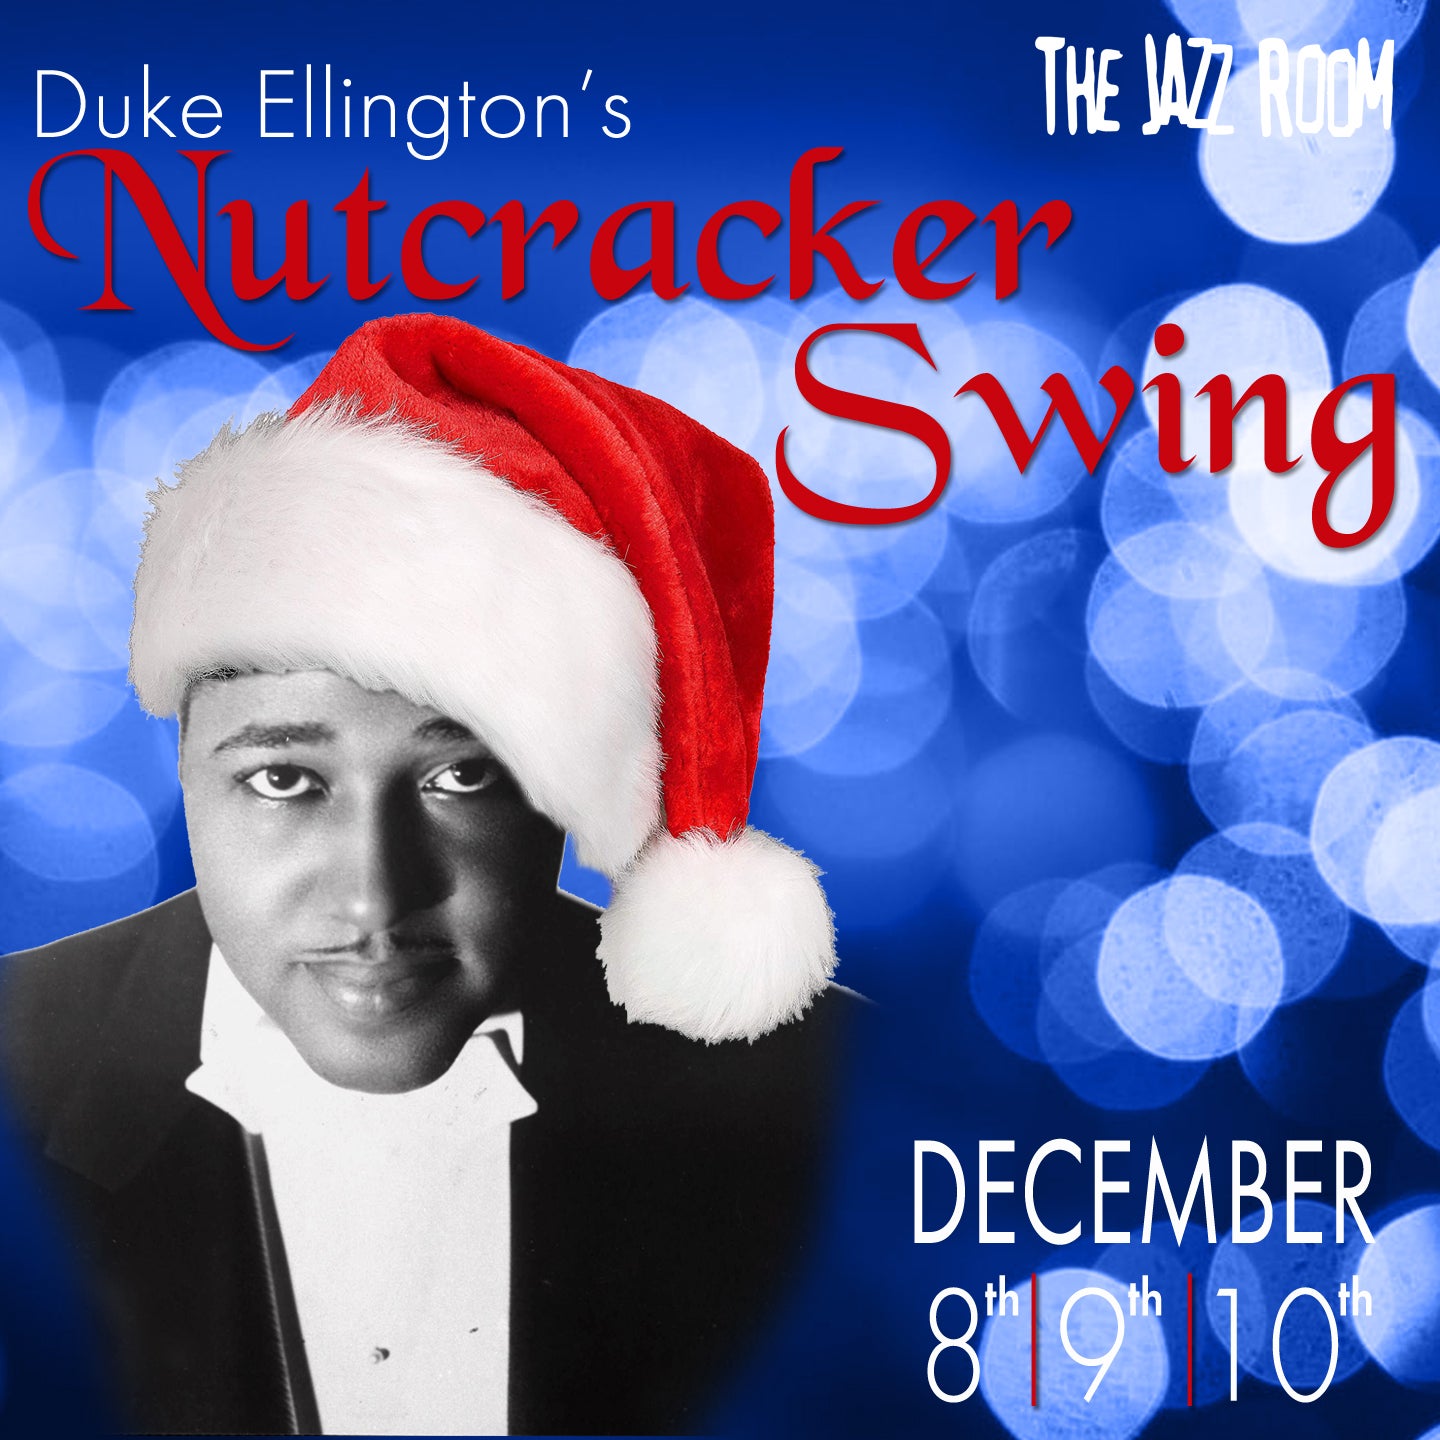 JAZZ ROOM Holiday Edition: Duke Ellington's Nutcracker Swing